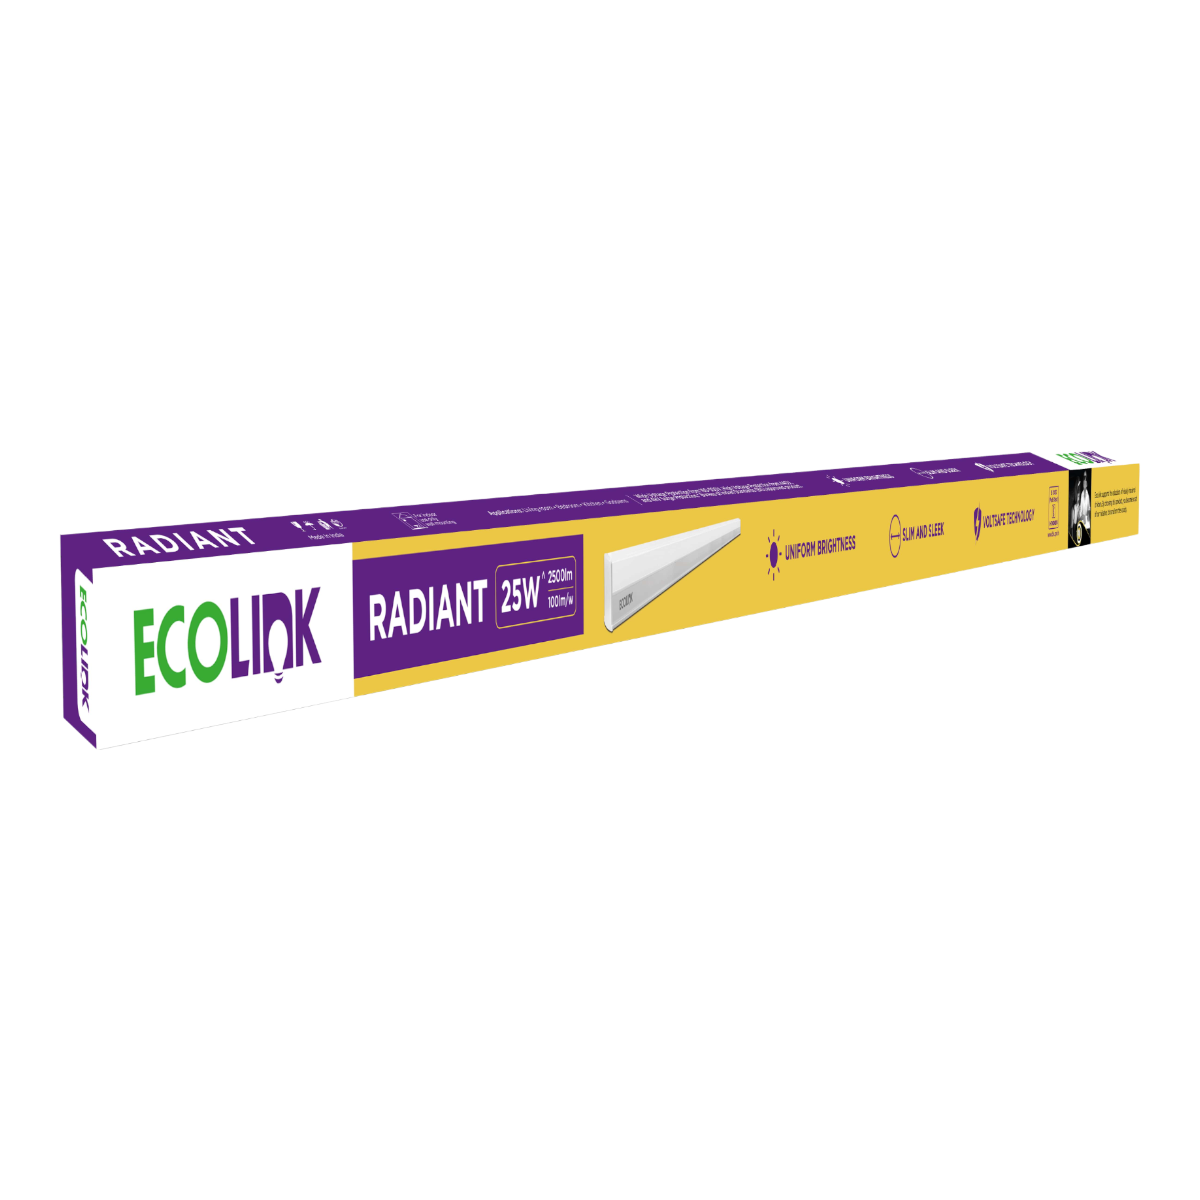 EcoLink Radiant LED Tube light